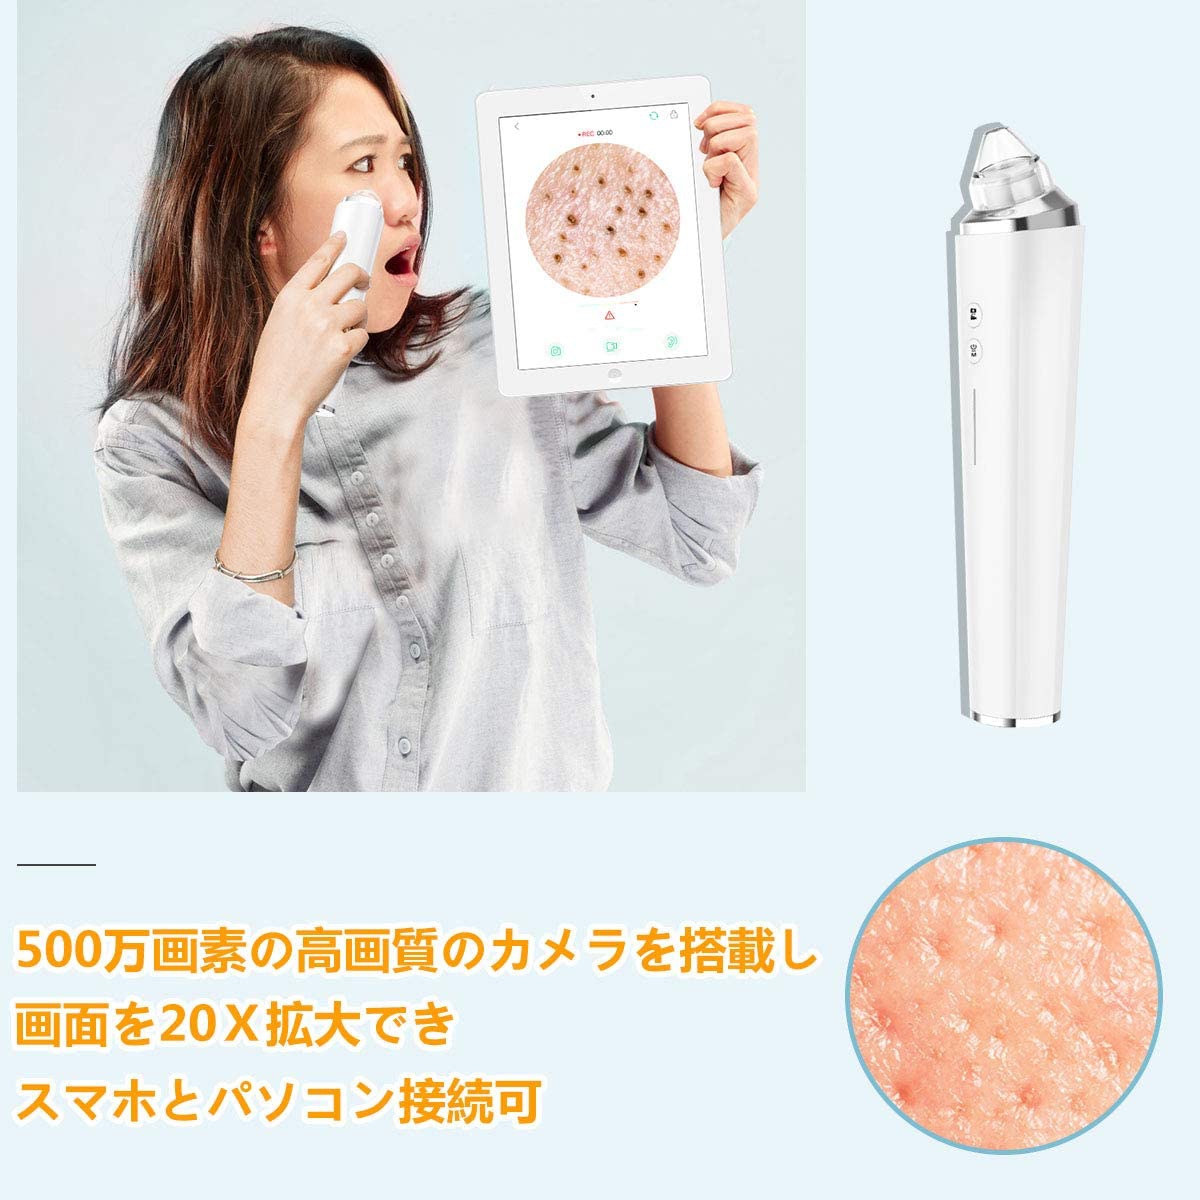 COYUTA(コユタ) 毛穴吸引器の商品画像サムネ2 